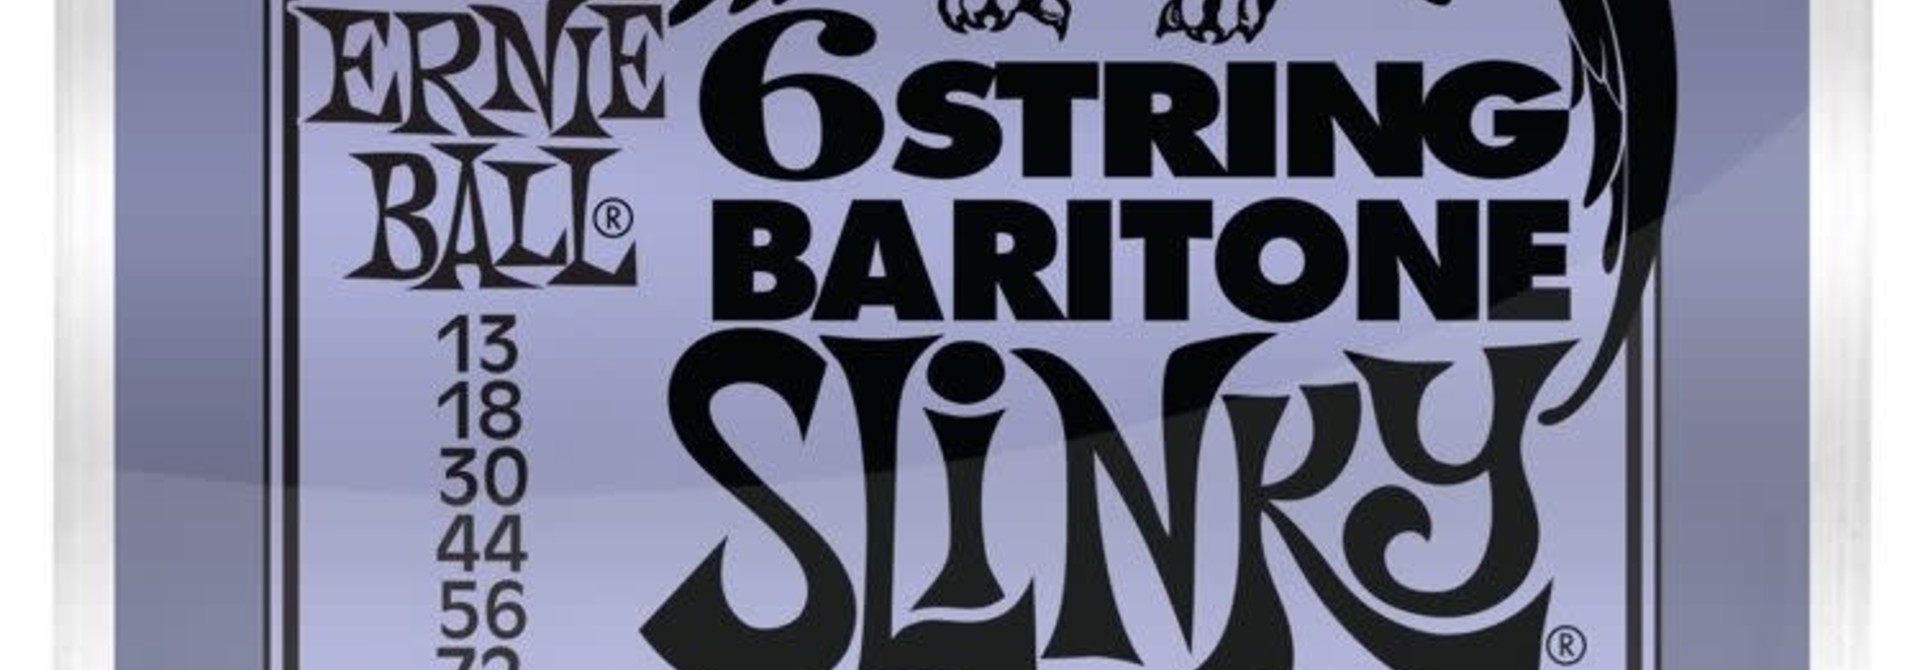 Ernie Ball 6-String Baritone Slinky Baritone Guitar Strings (13-72) 2839